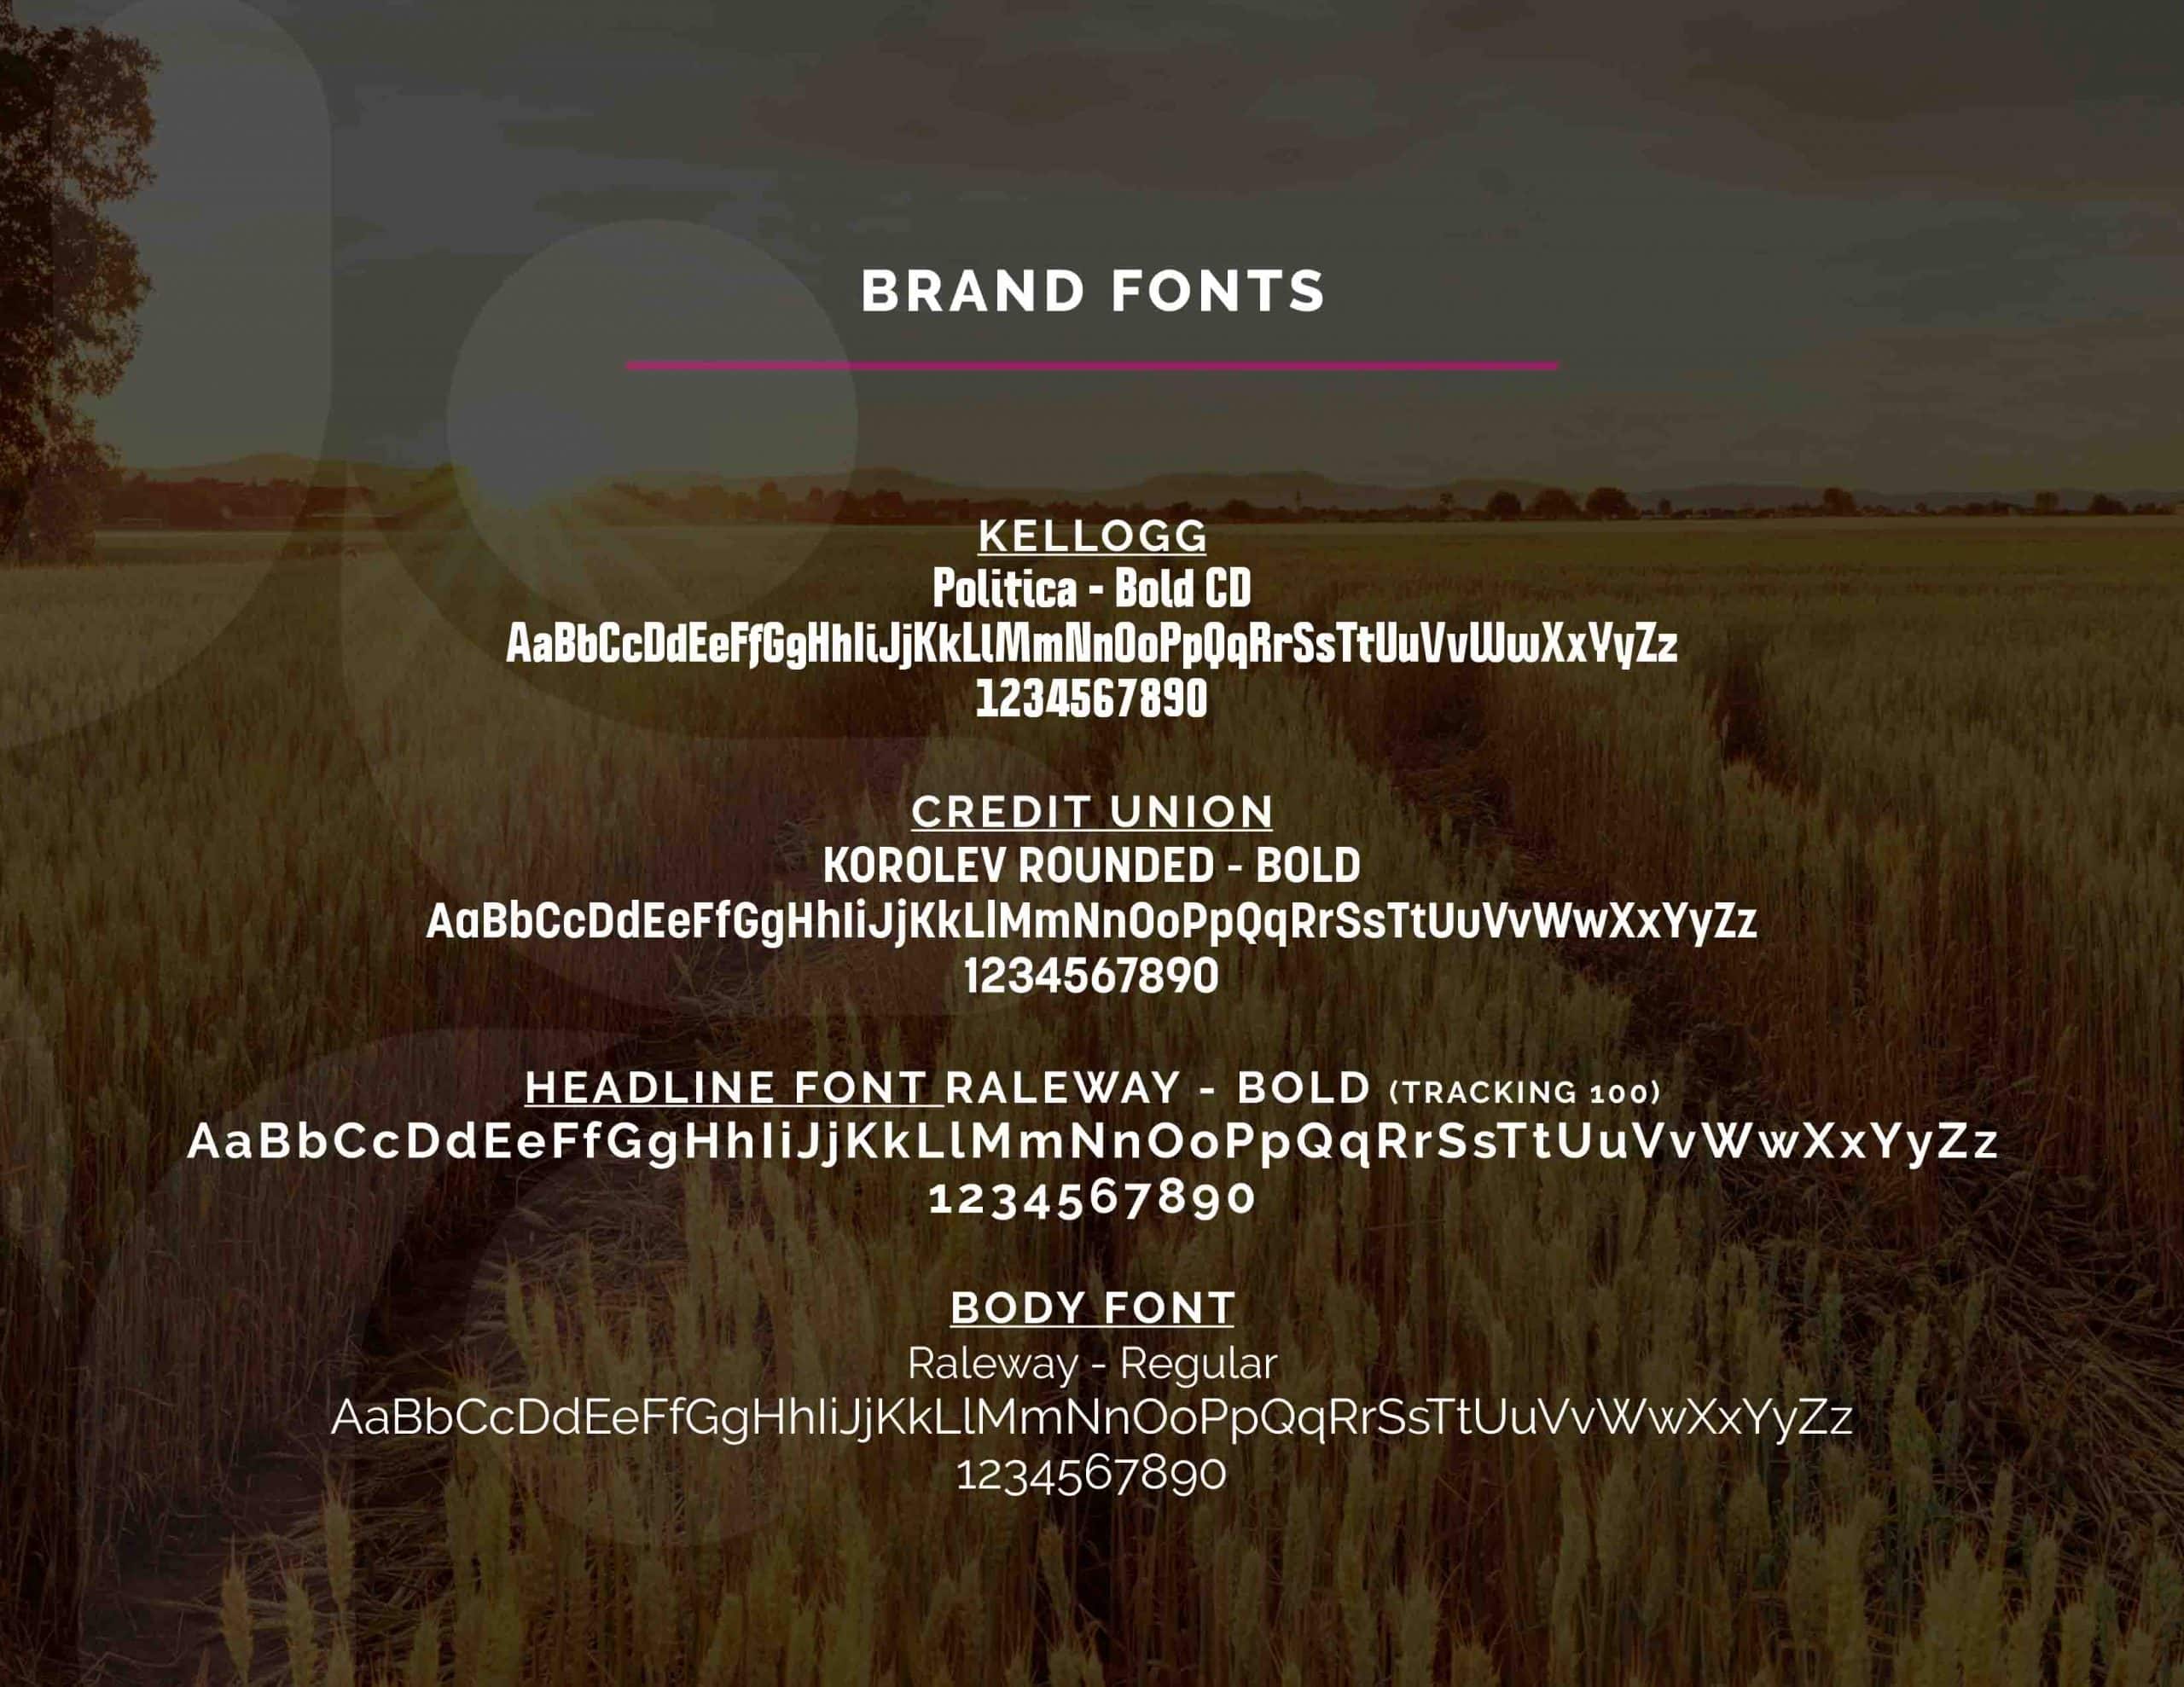 Kellogg Credit Union Brand Guide - Fonts